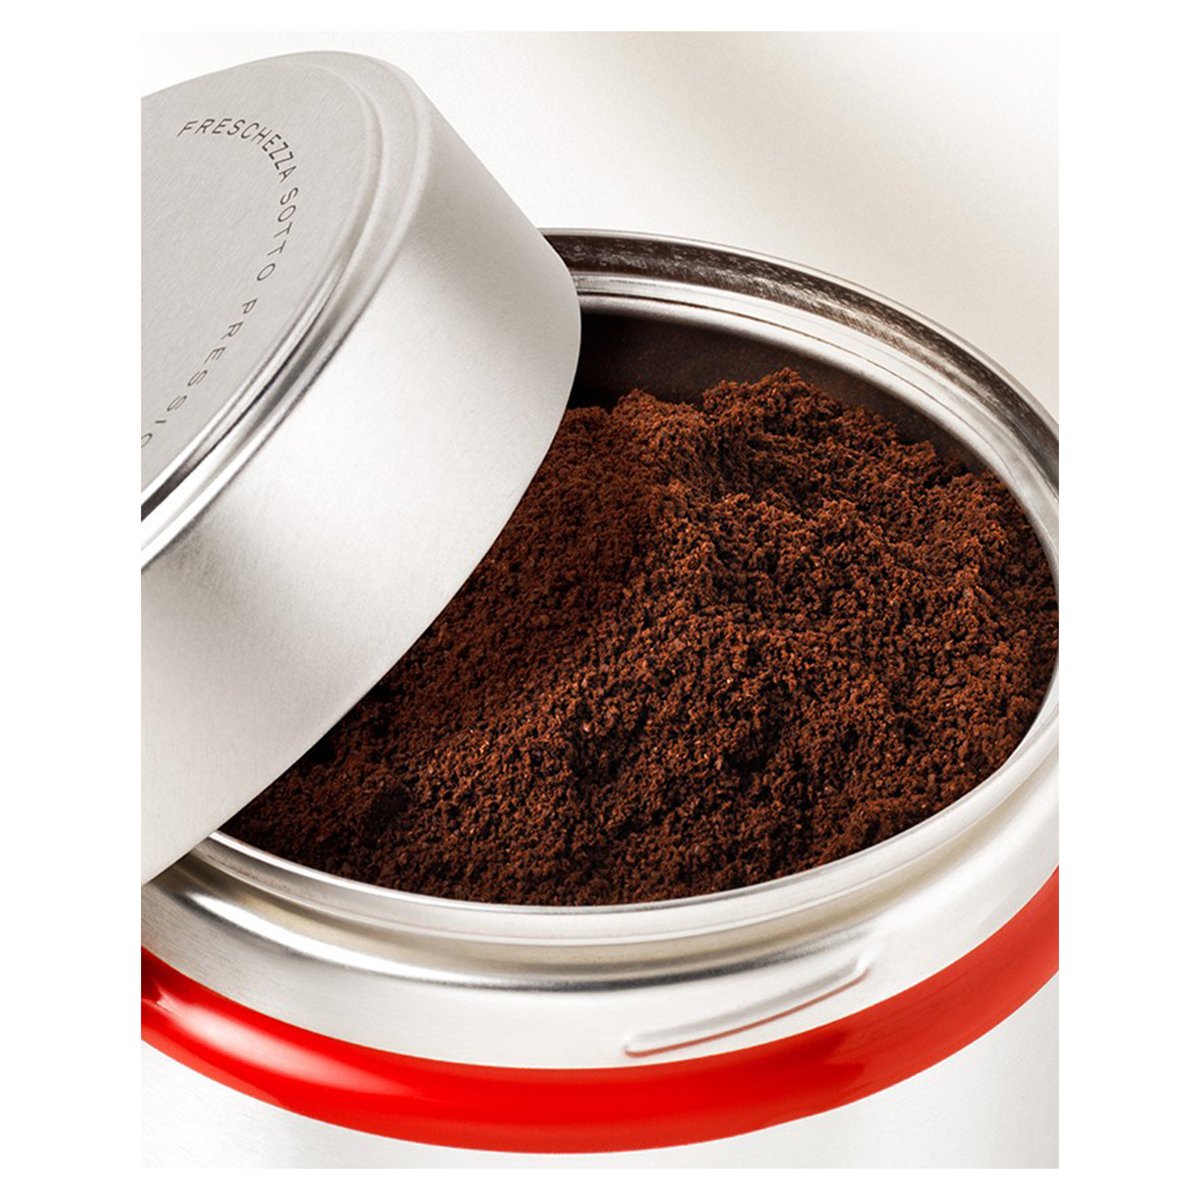 Illy Classic Roast Ground Coffee 250 g